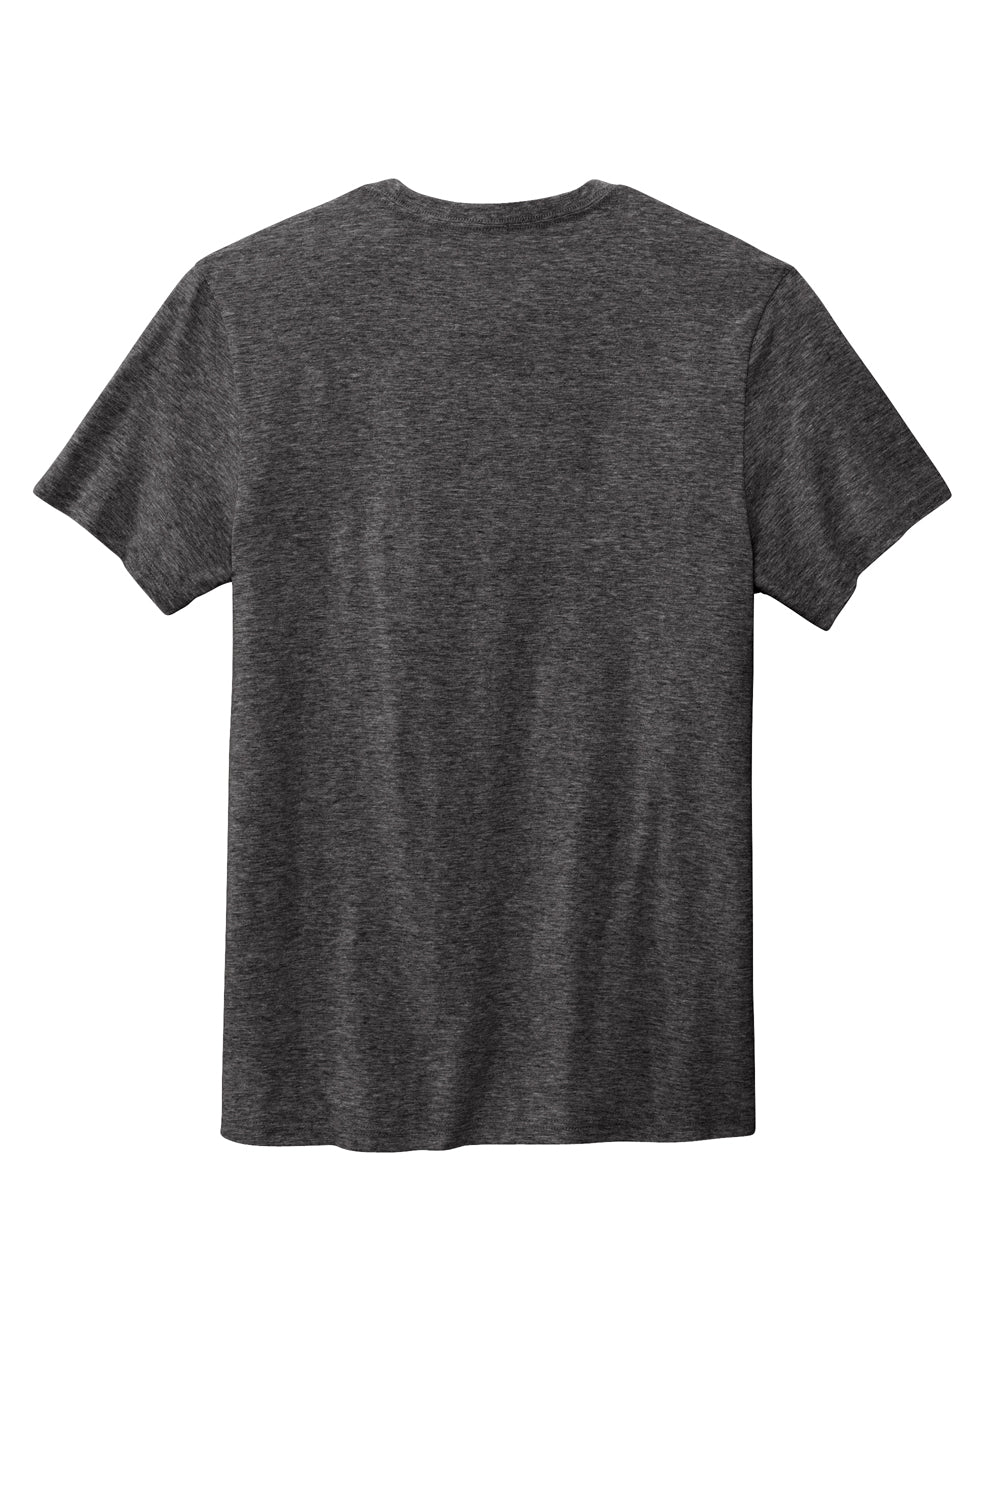 Volunteer Knitwear VL45 Daily Short Sleeve Crewneck T-Shirt Heather Dark Grey Flat Back